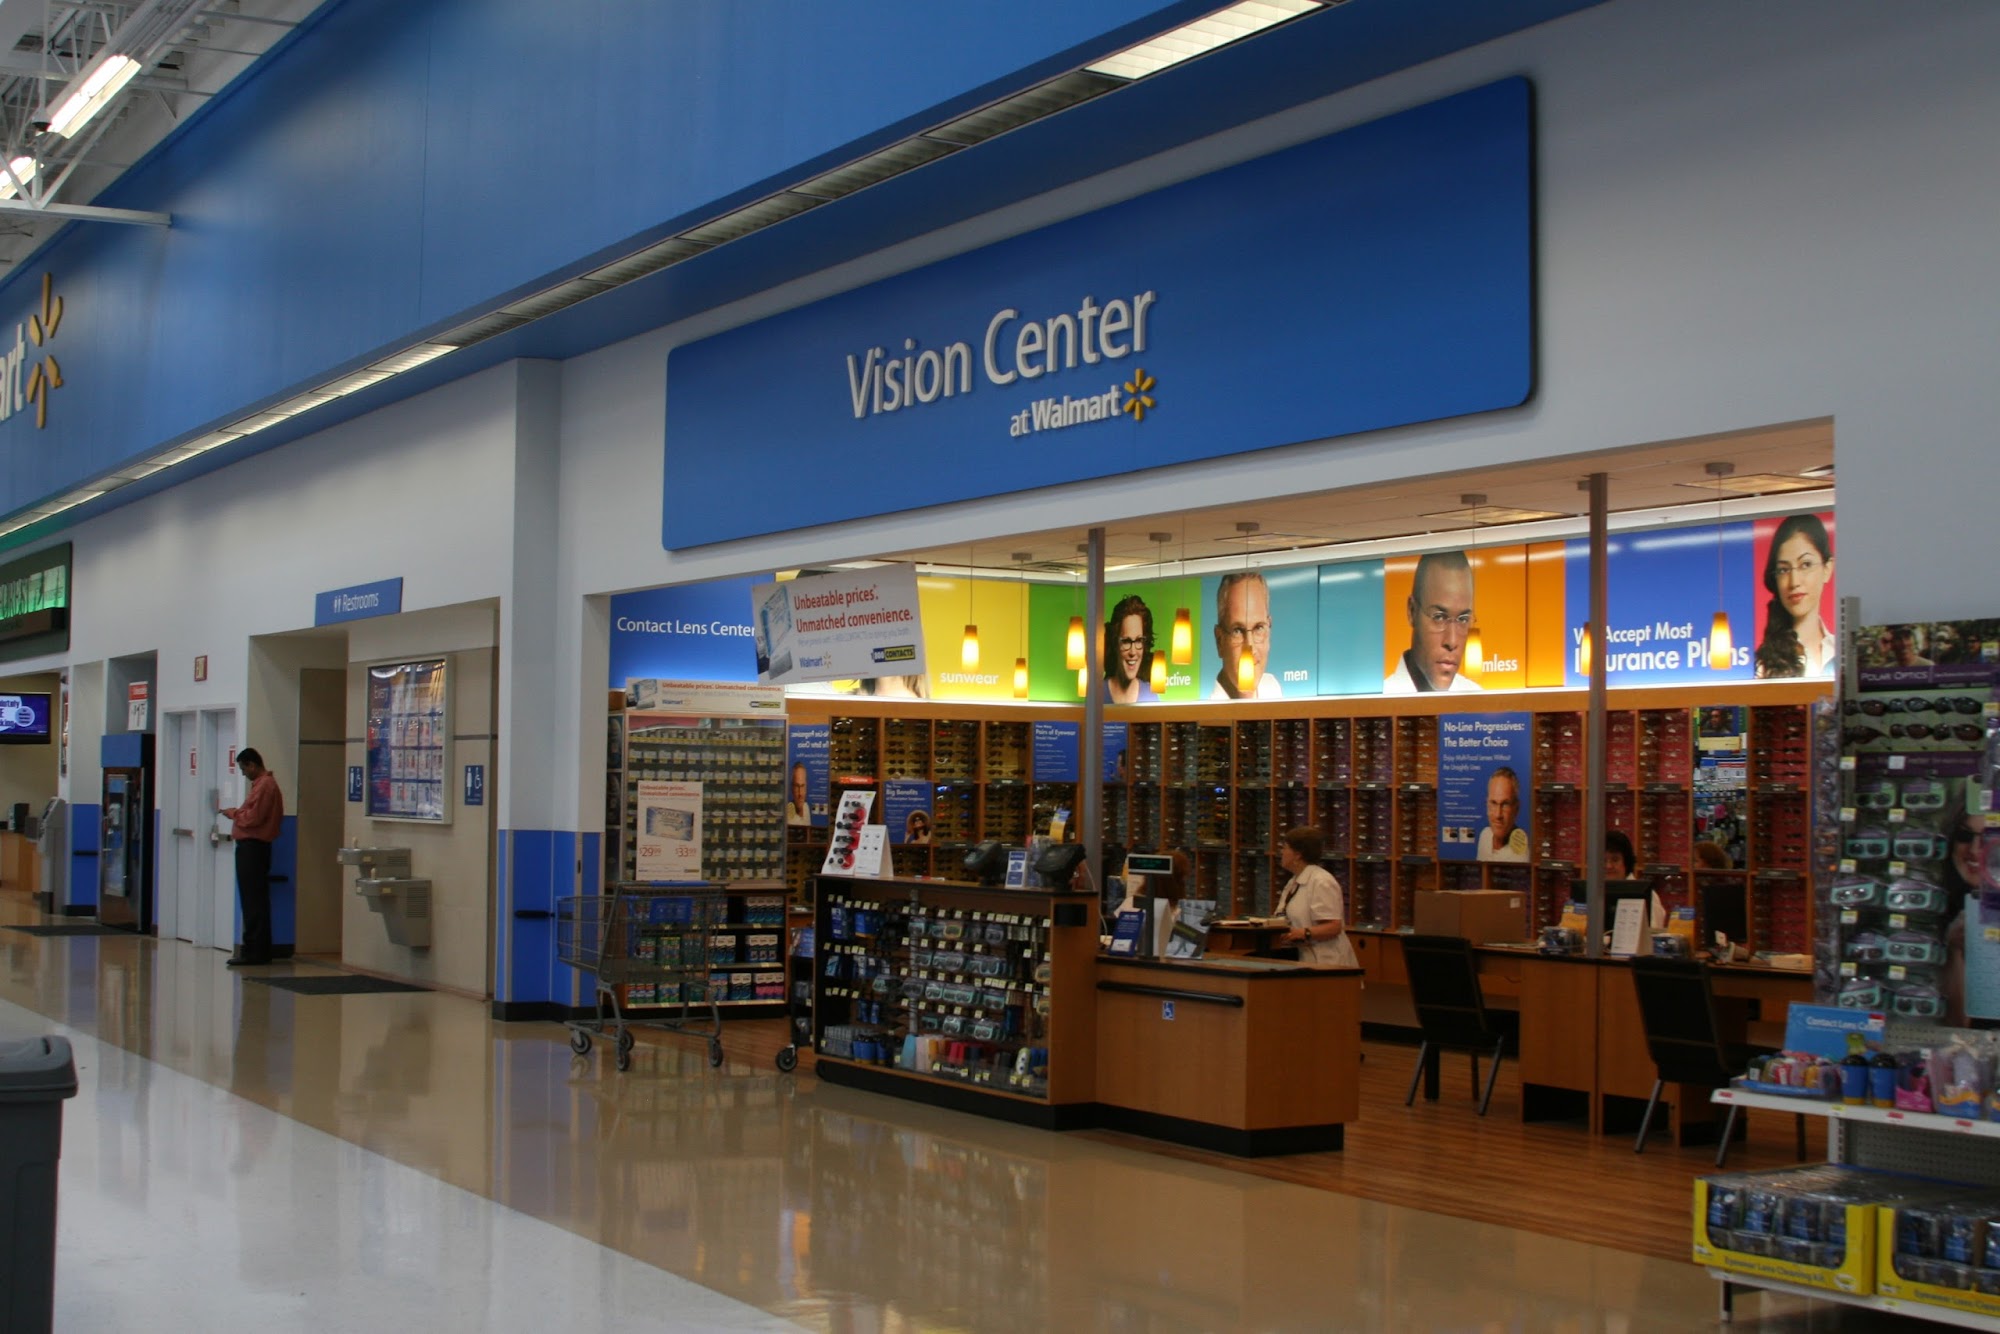 Walmart Vision & Glasses 610 Wesley Dr, Wood River Illinois 62095